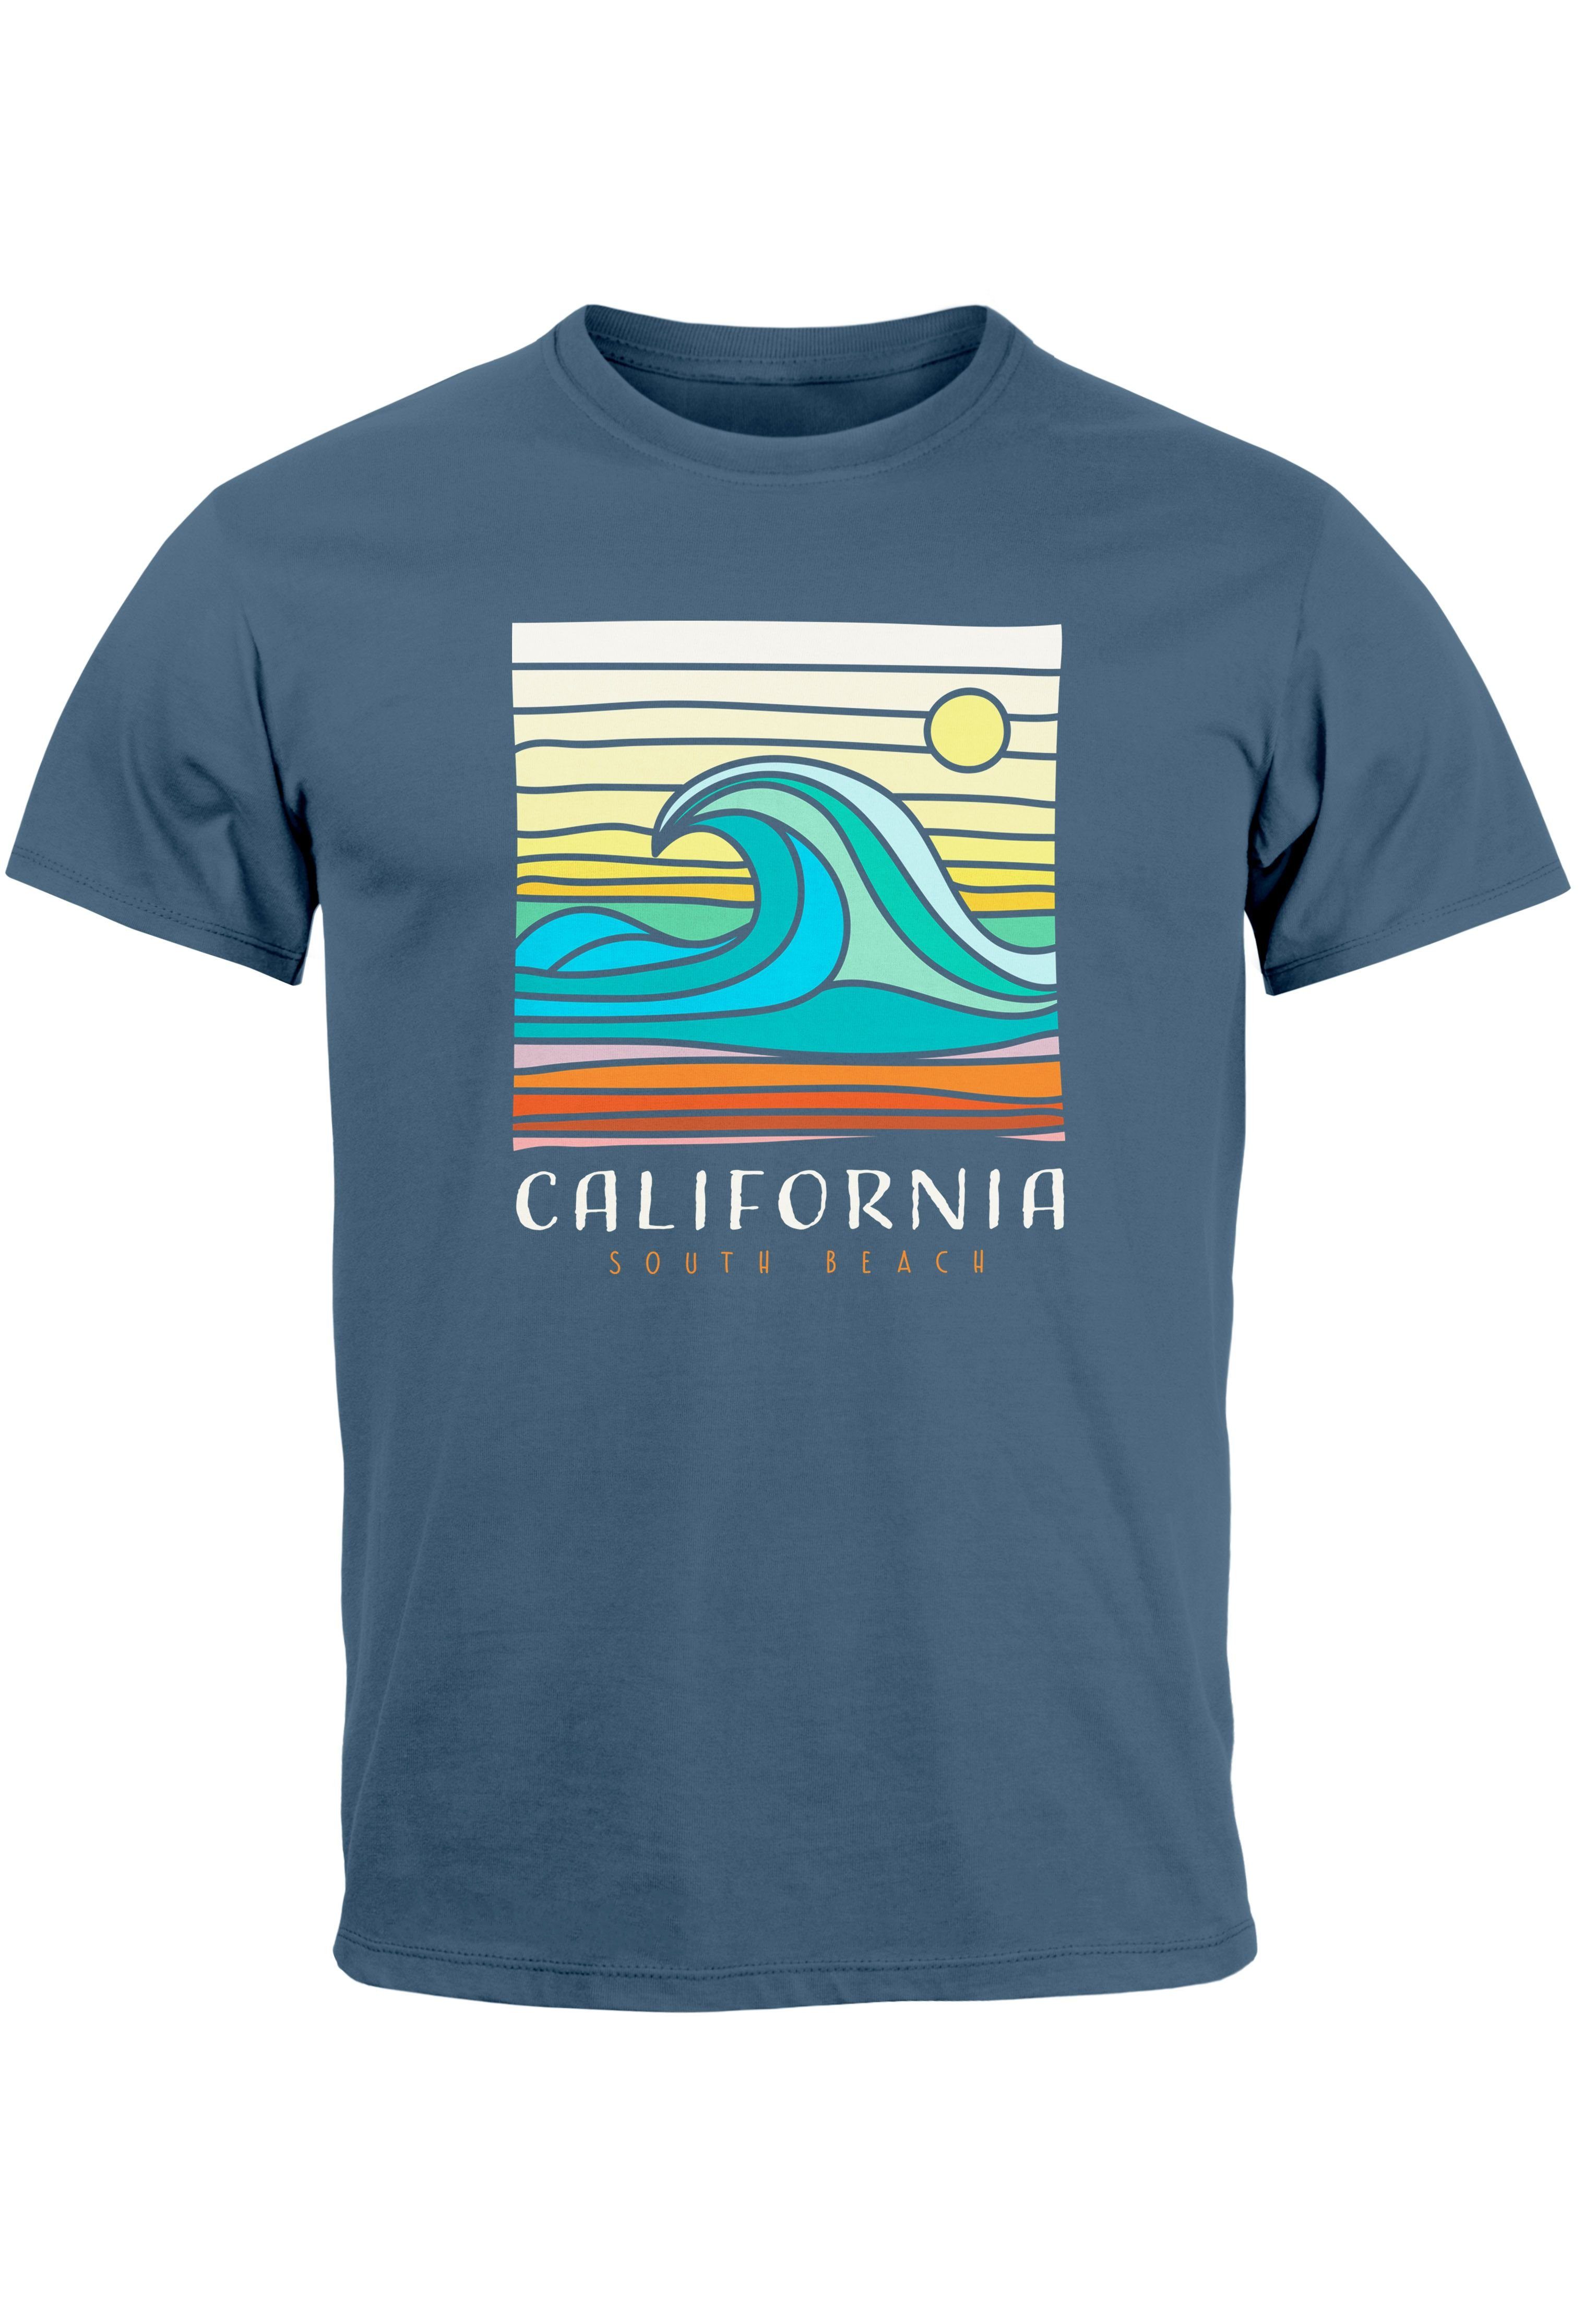 Neverless Print-Shirt Herren T-Shirt California South Beach Welle Wave Surfing Print Aufdruc mit Print denim blue